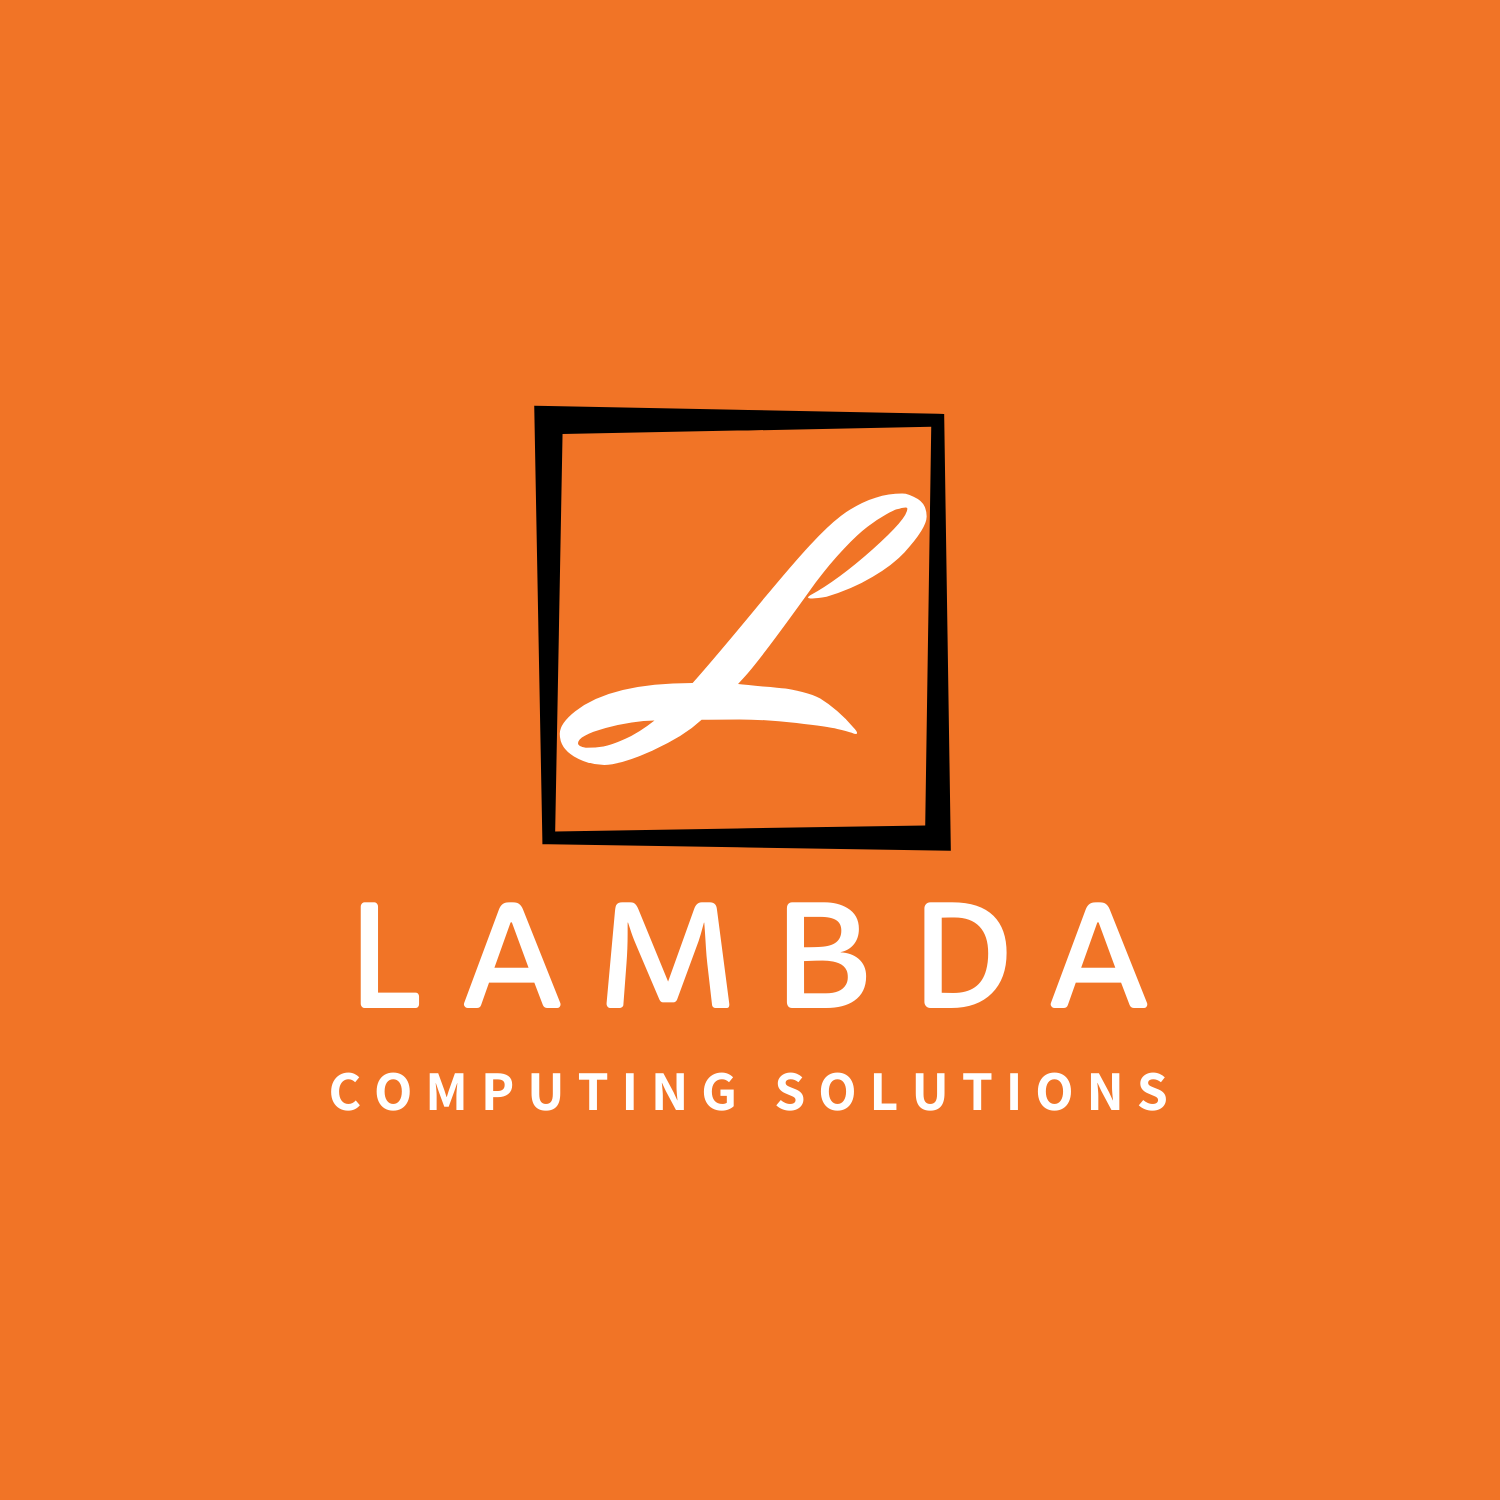 Company logo for Lambda Computing Solutions (s) Pte. Ltd.